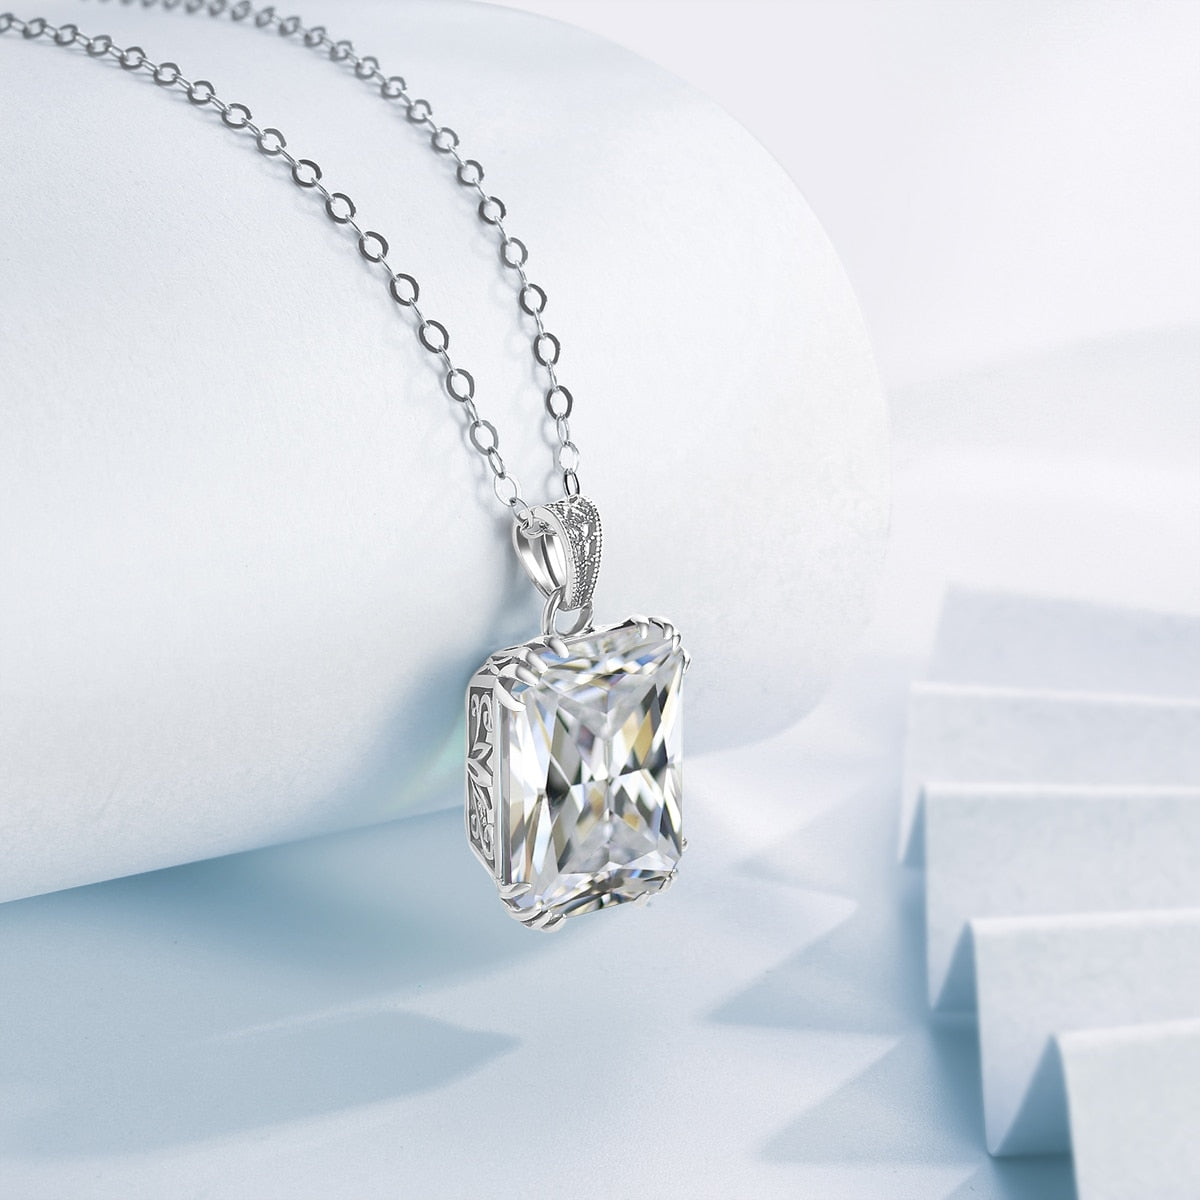 SILVERCHAKRA 925 Sterling Silver Necklace For Women Luxury Aquamarine Gemstones Necklace Pendant Fine Jewelry Filigree Design White Zircon 45cm